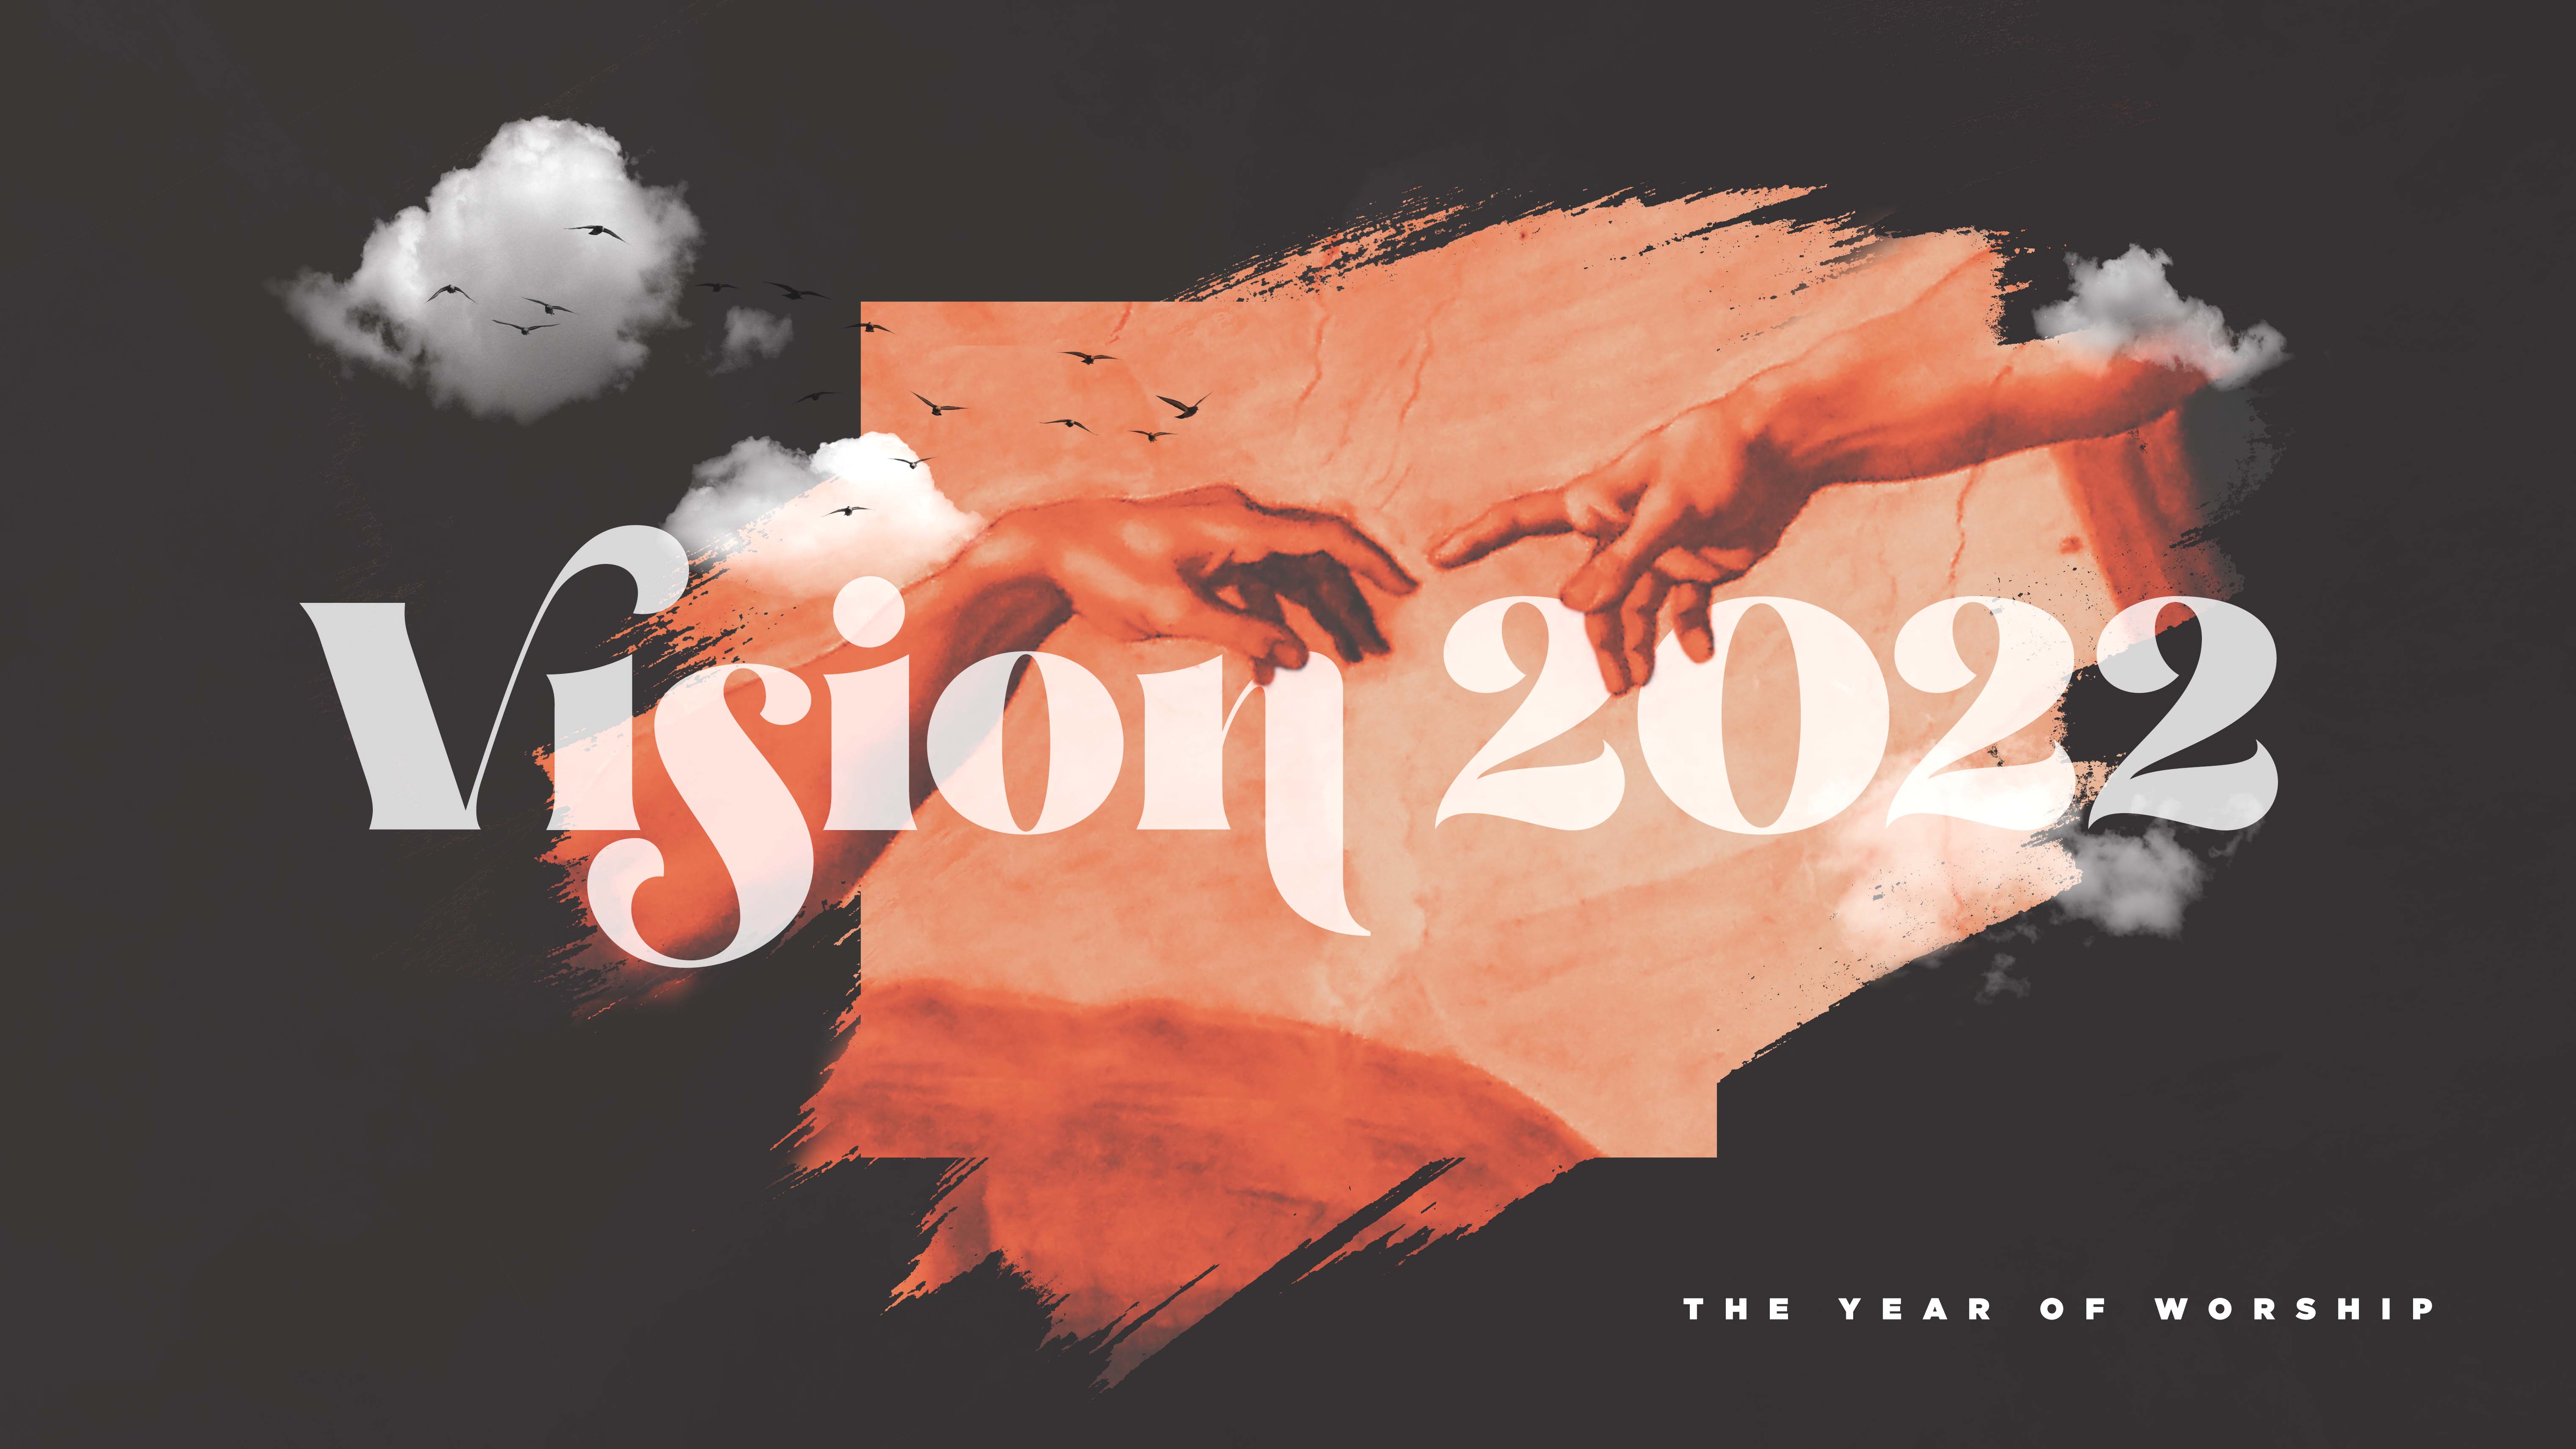 Vision 2022